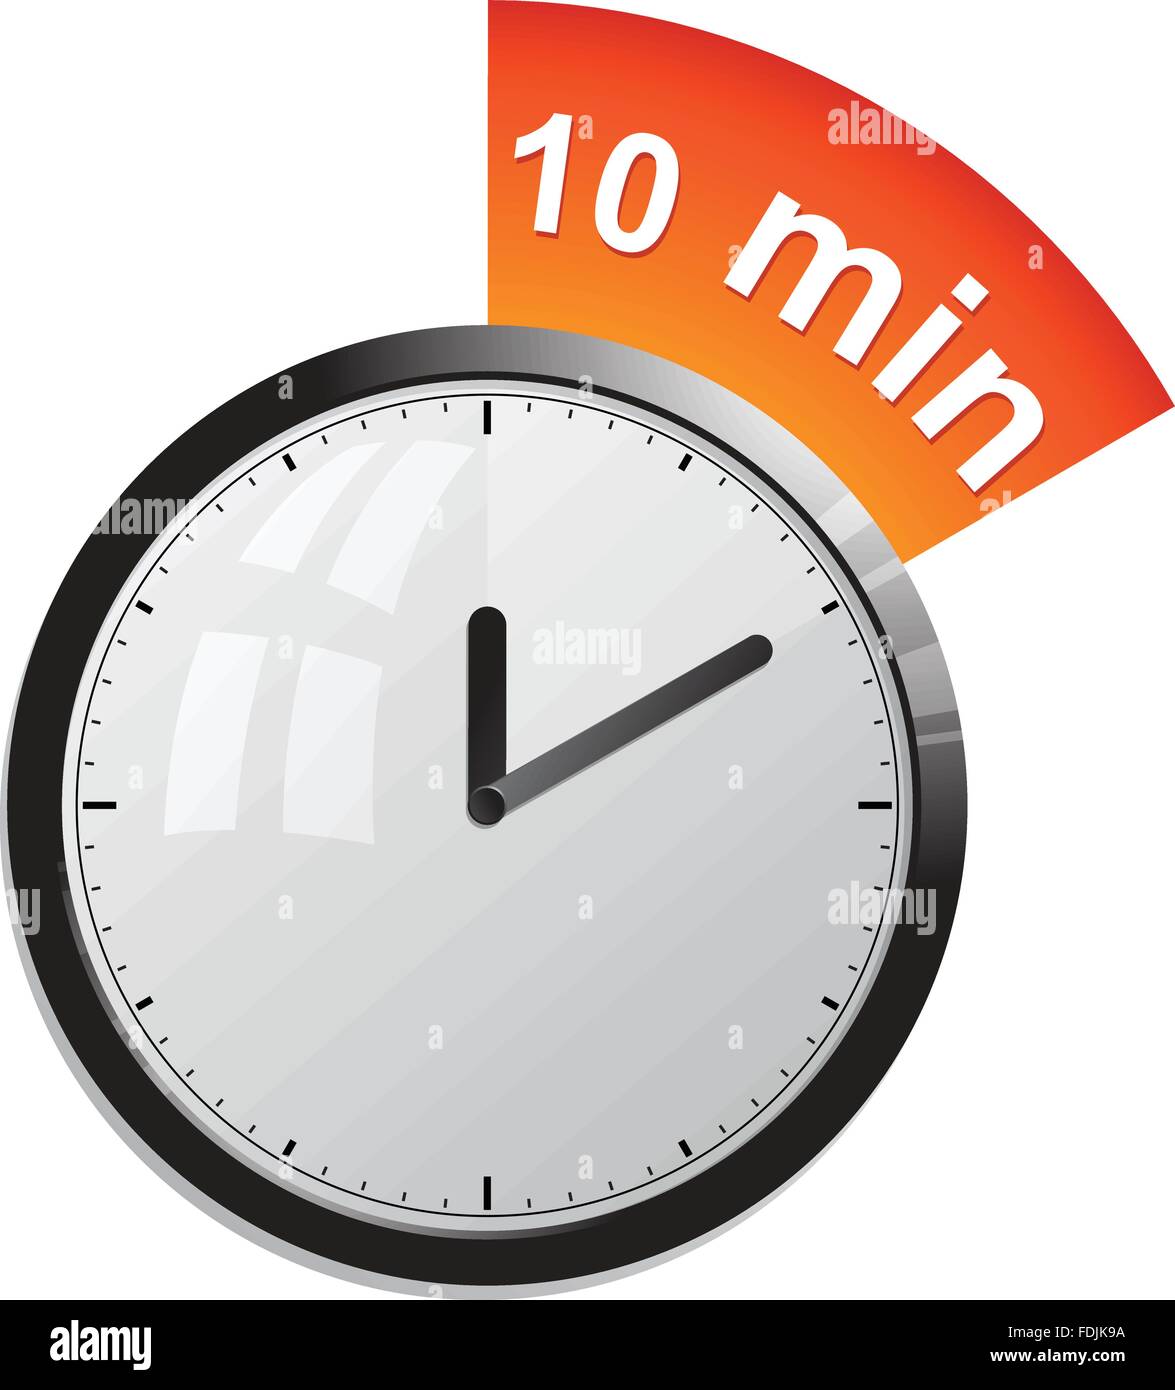 Minuteur 10 minutes vector illustration Image Vectorielle Stock - Alamy